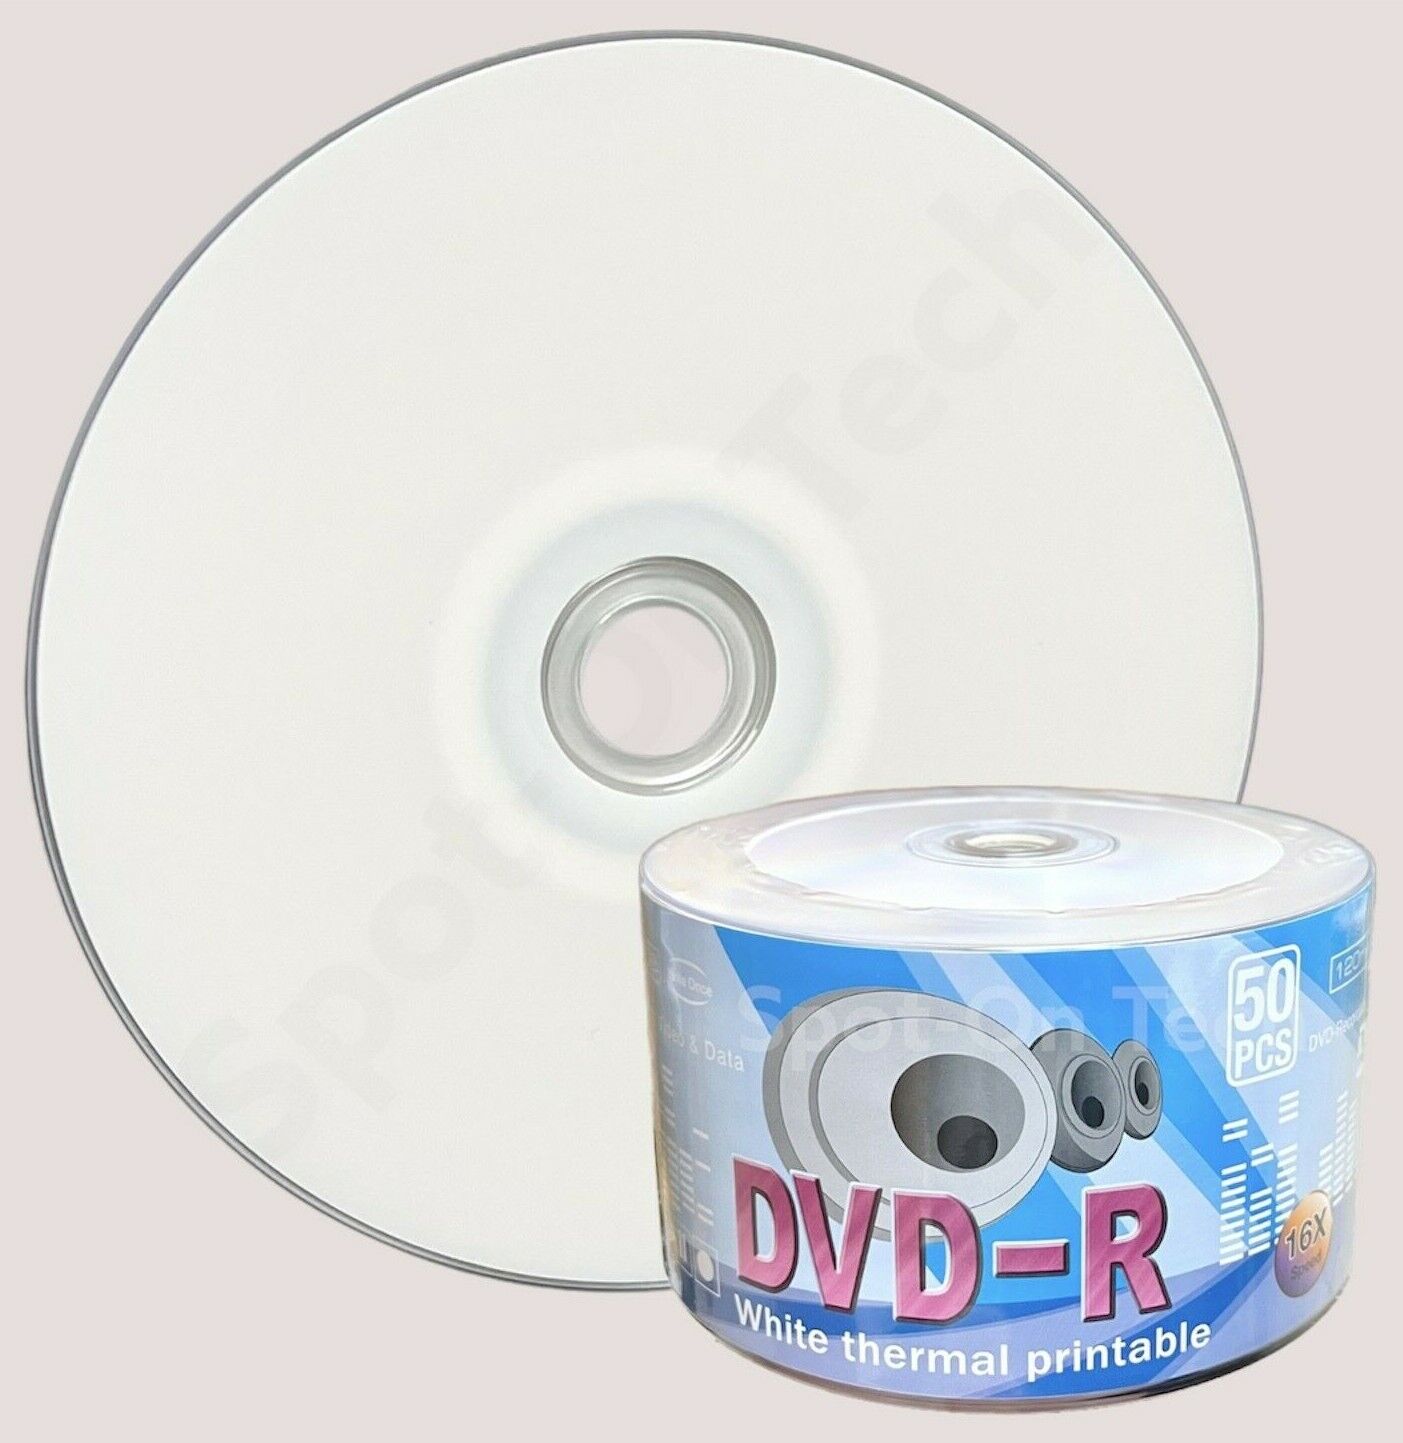 LSK DVD DVD-R White thermal Blank Disc 16X 4.7GB/120Min Duplication Grade - Lot